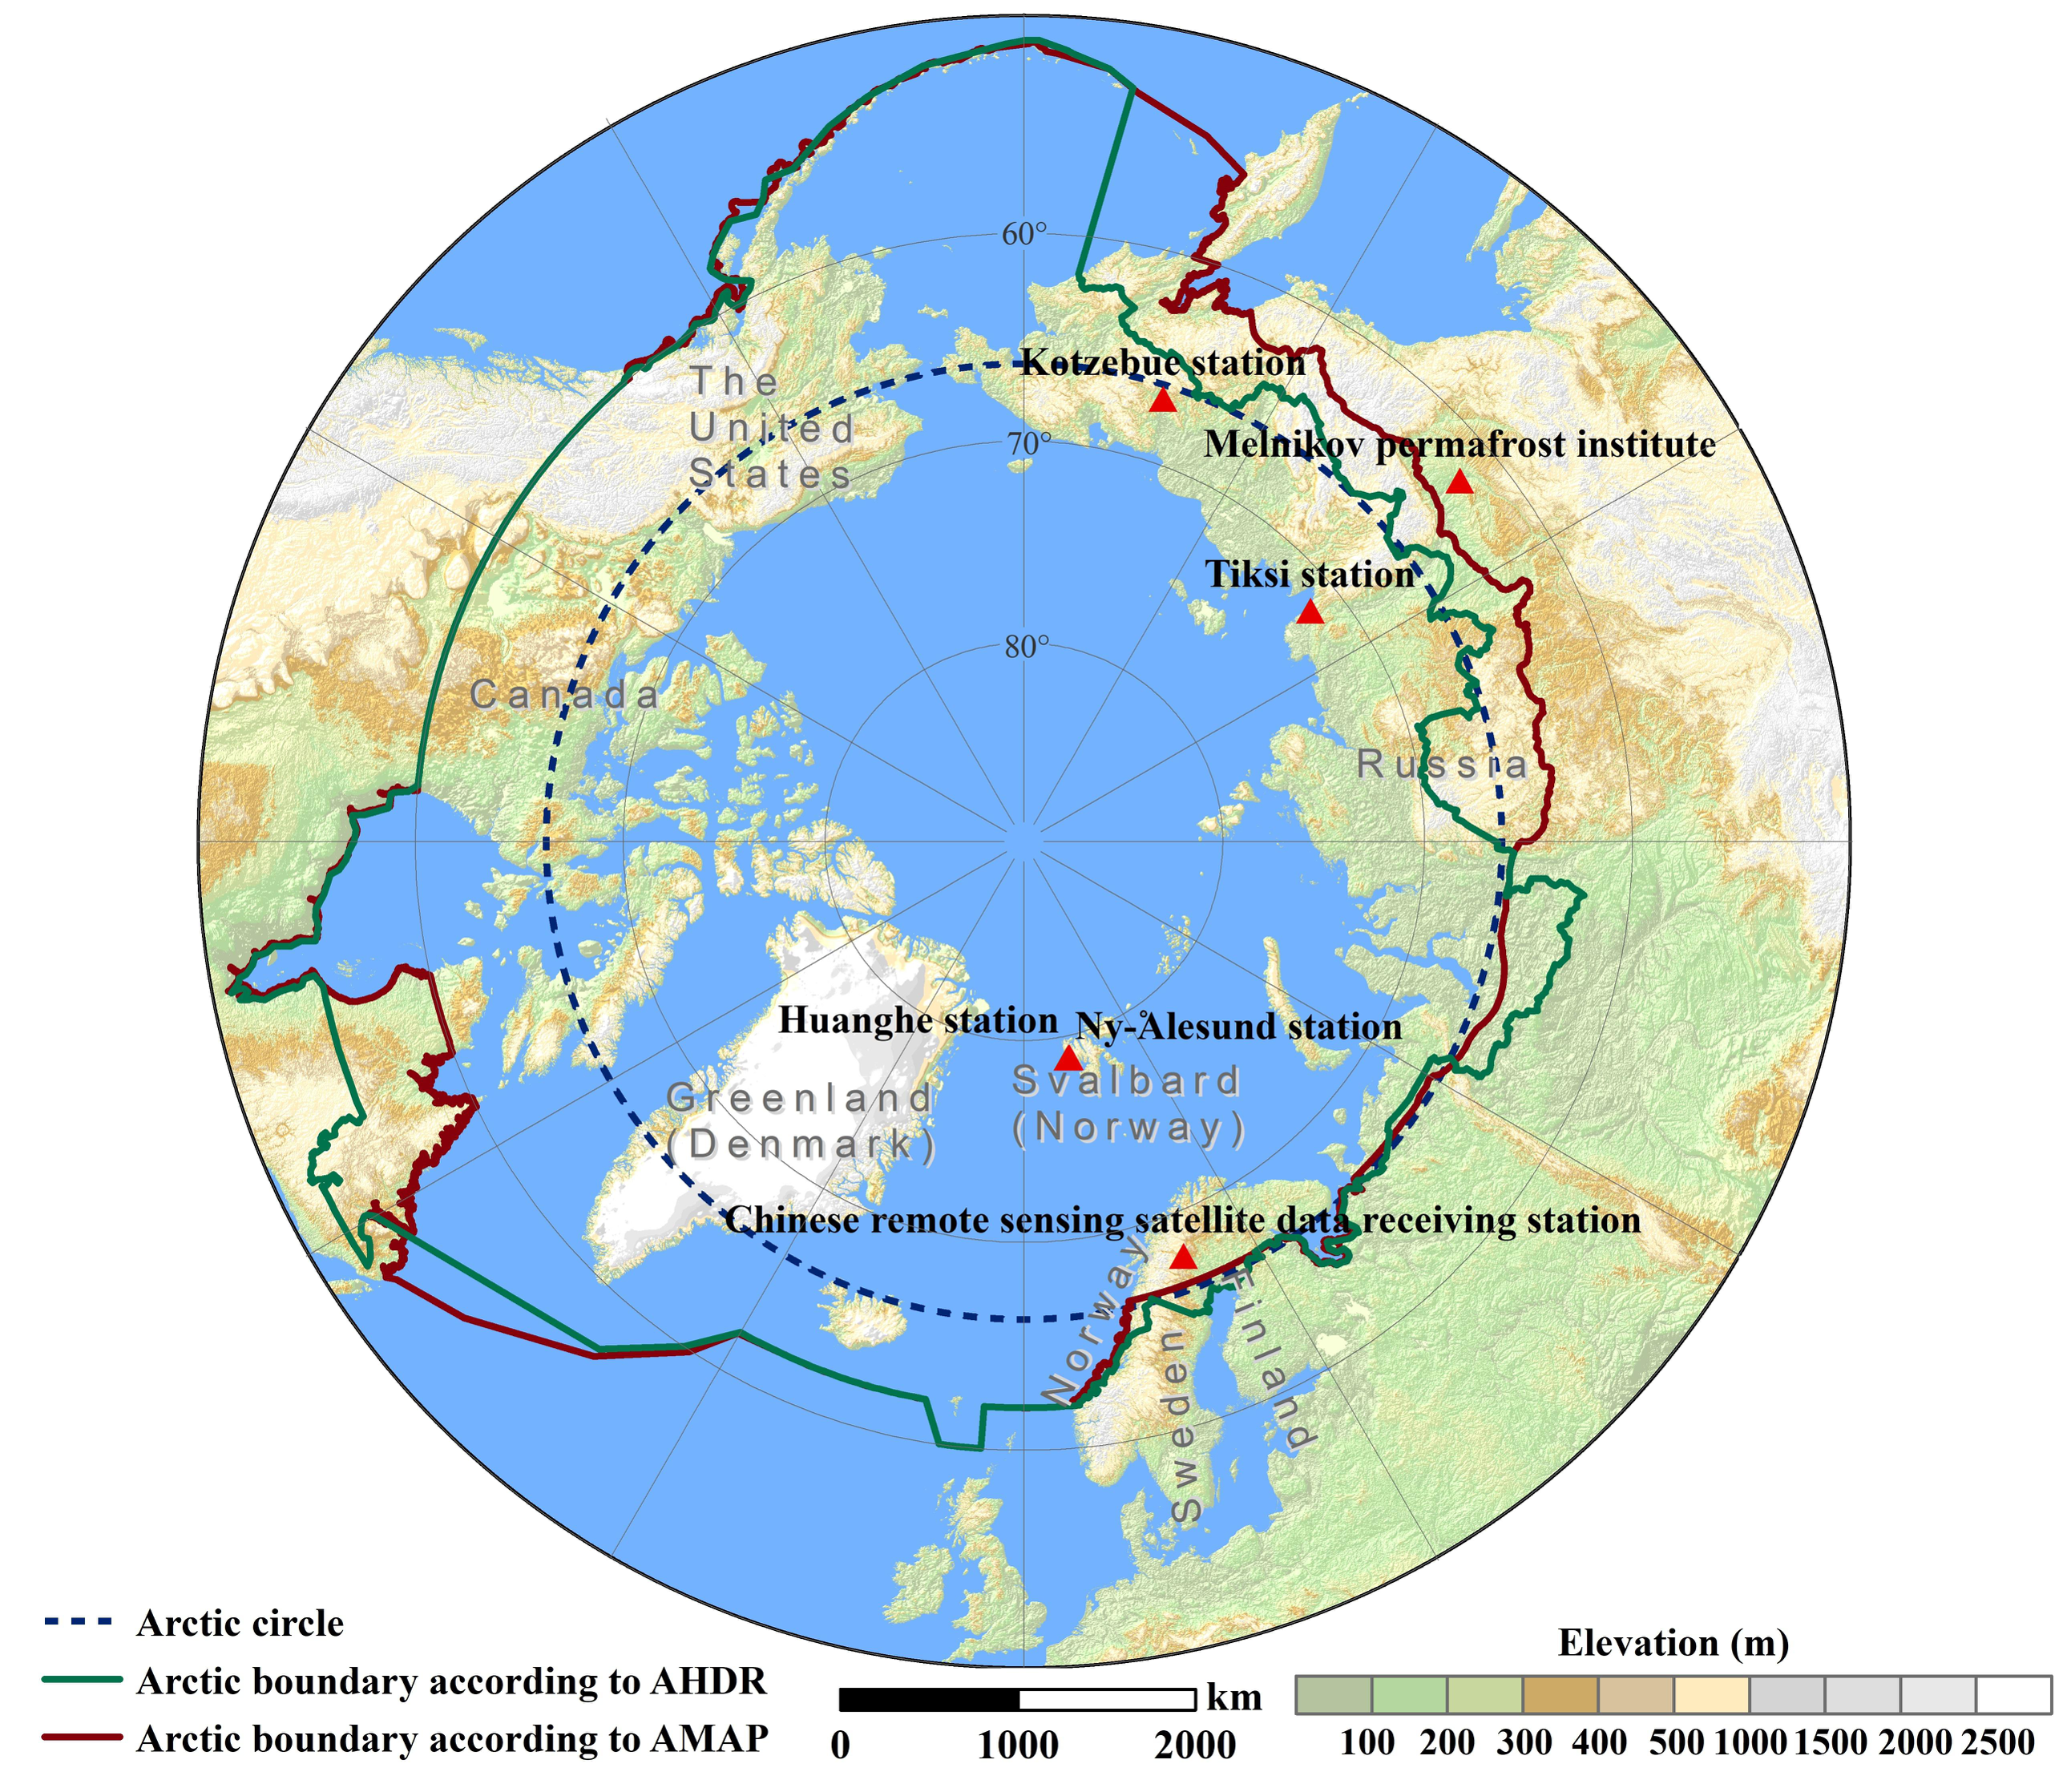 Arctic (AMAP) and arctic (AHDR) regional boundary data